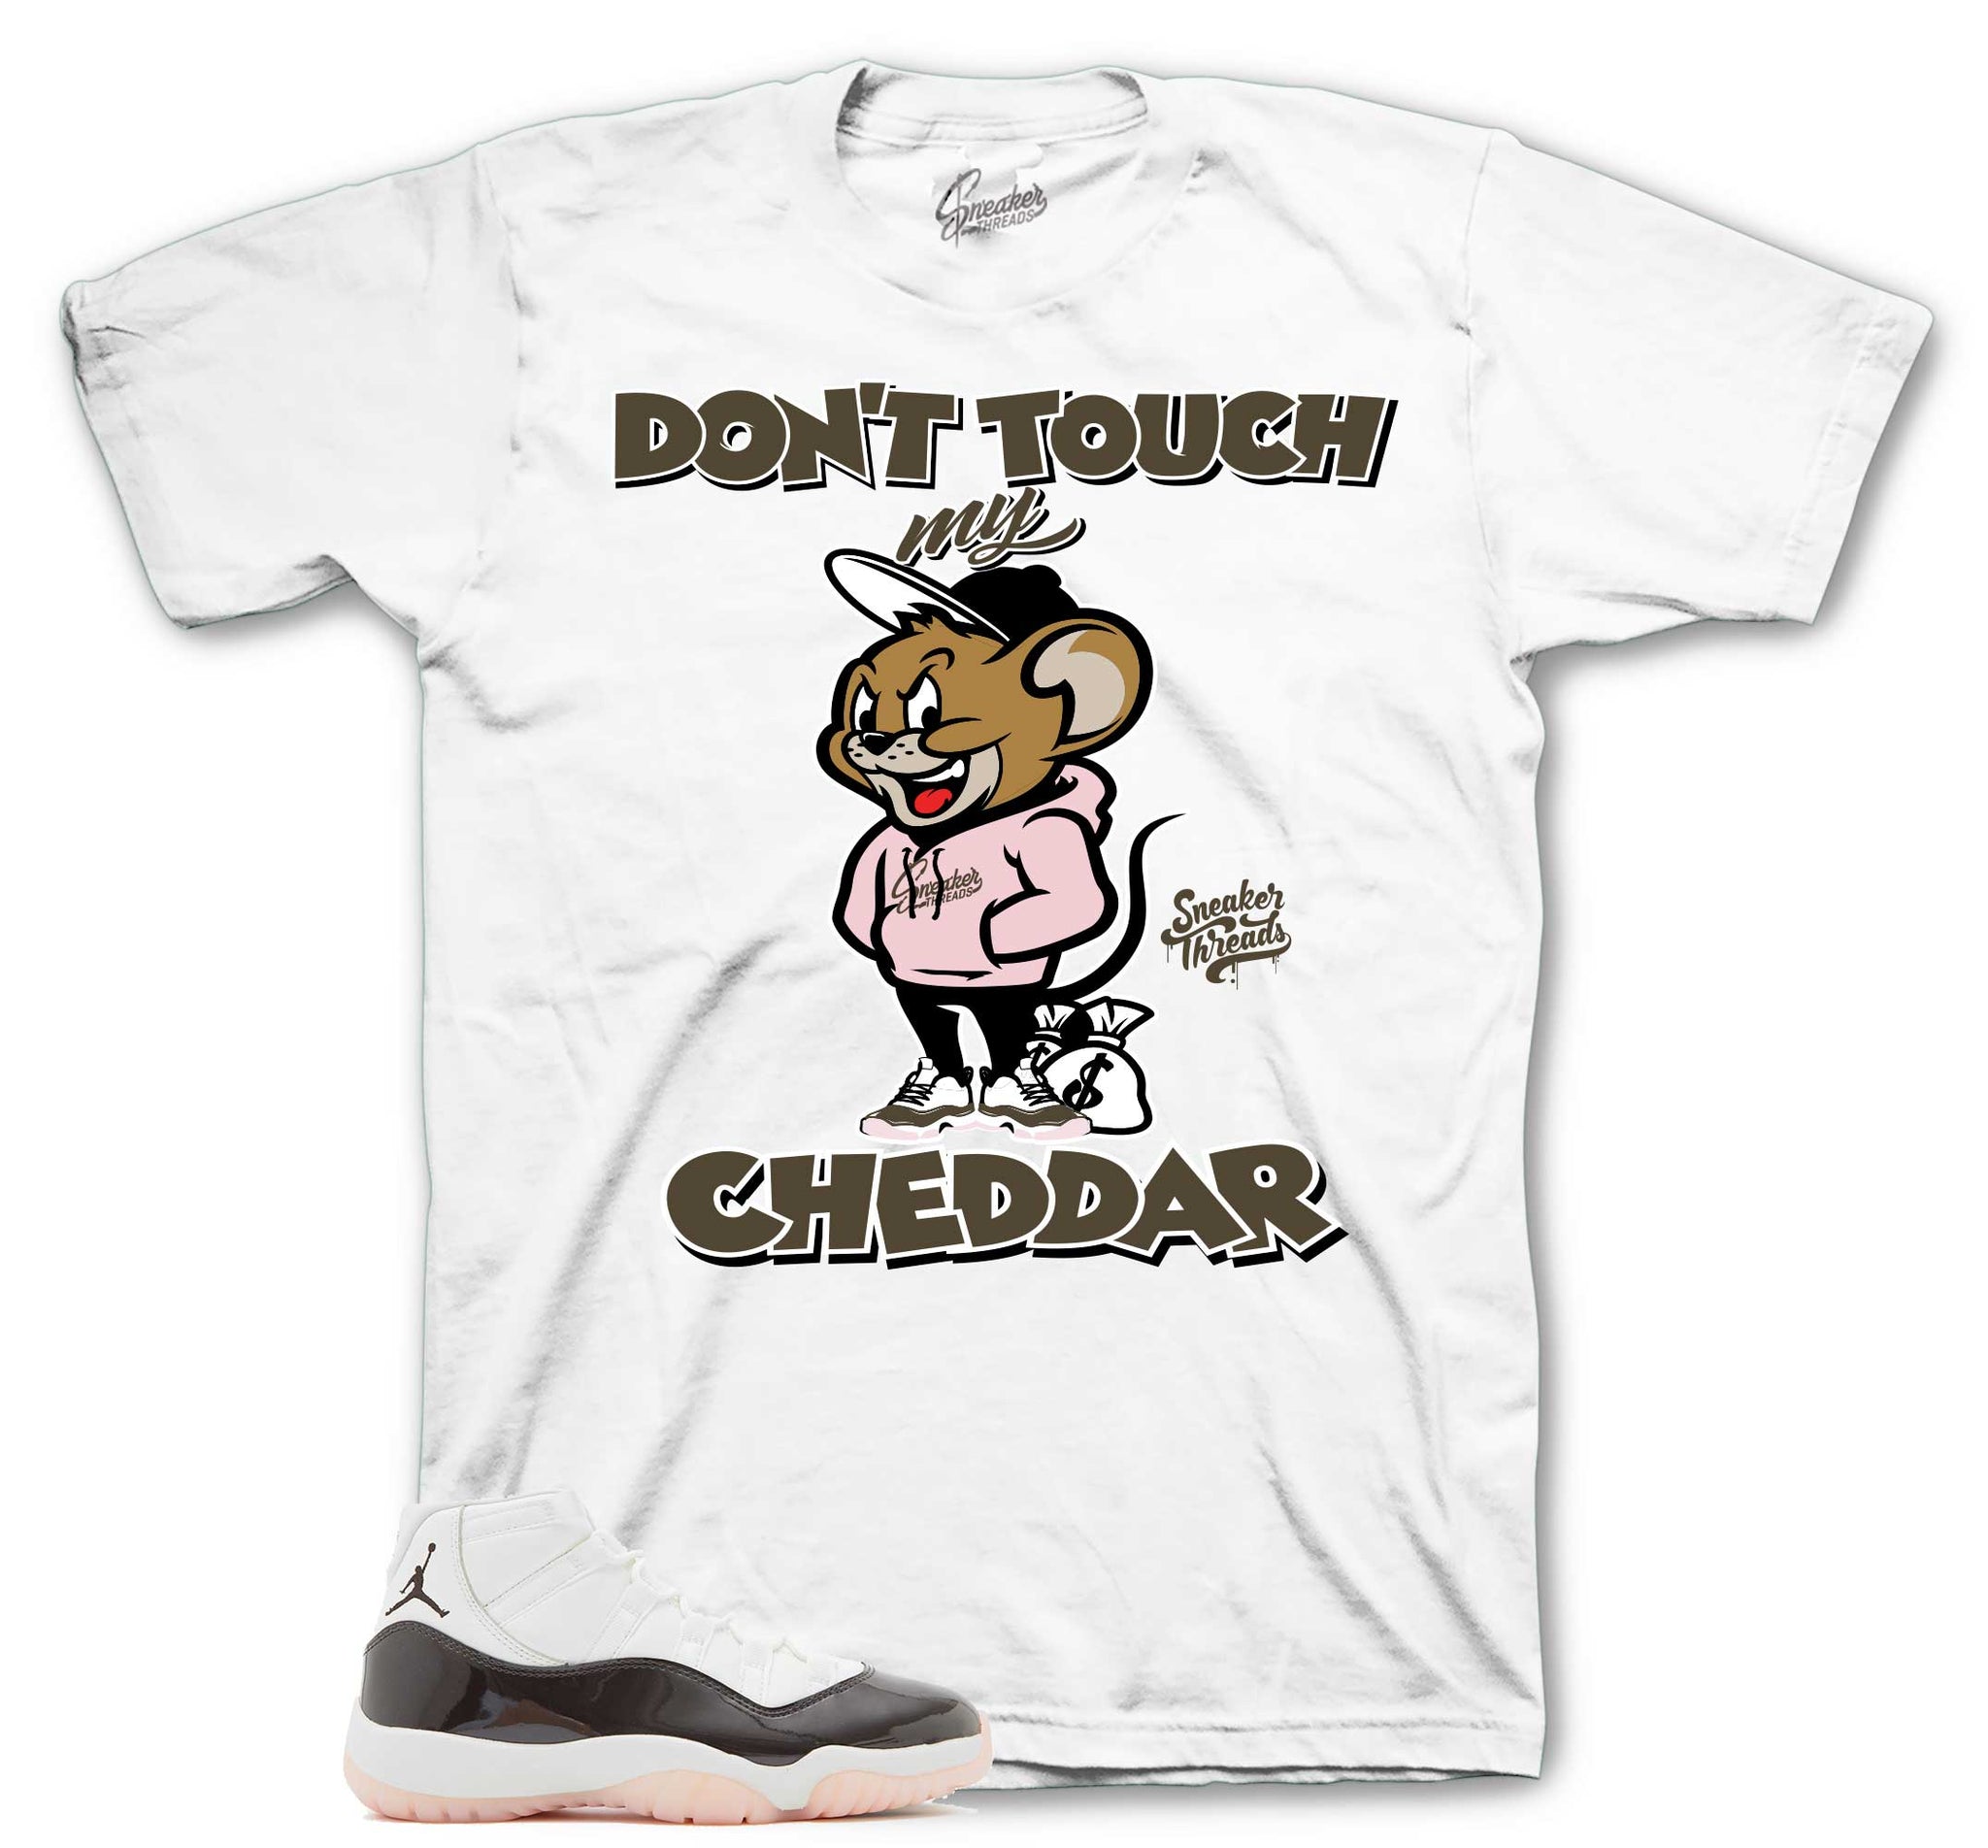 Cheddar T-Shirt - Retro 11 Neapolitan Shirt